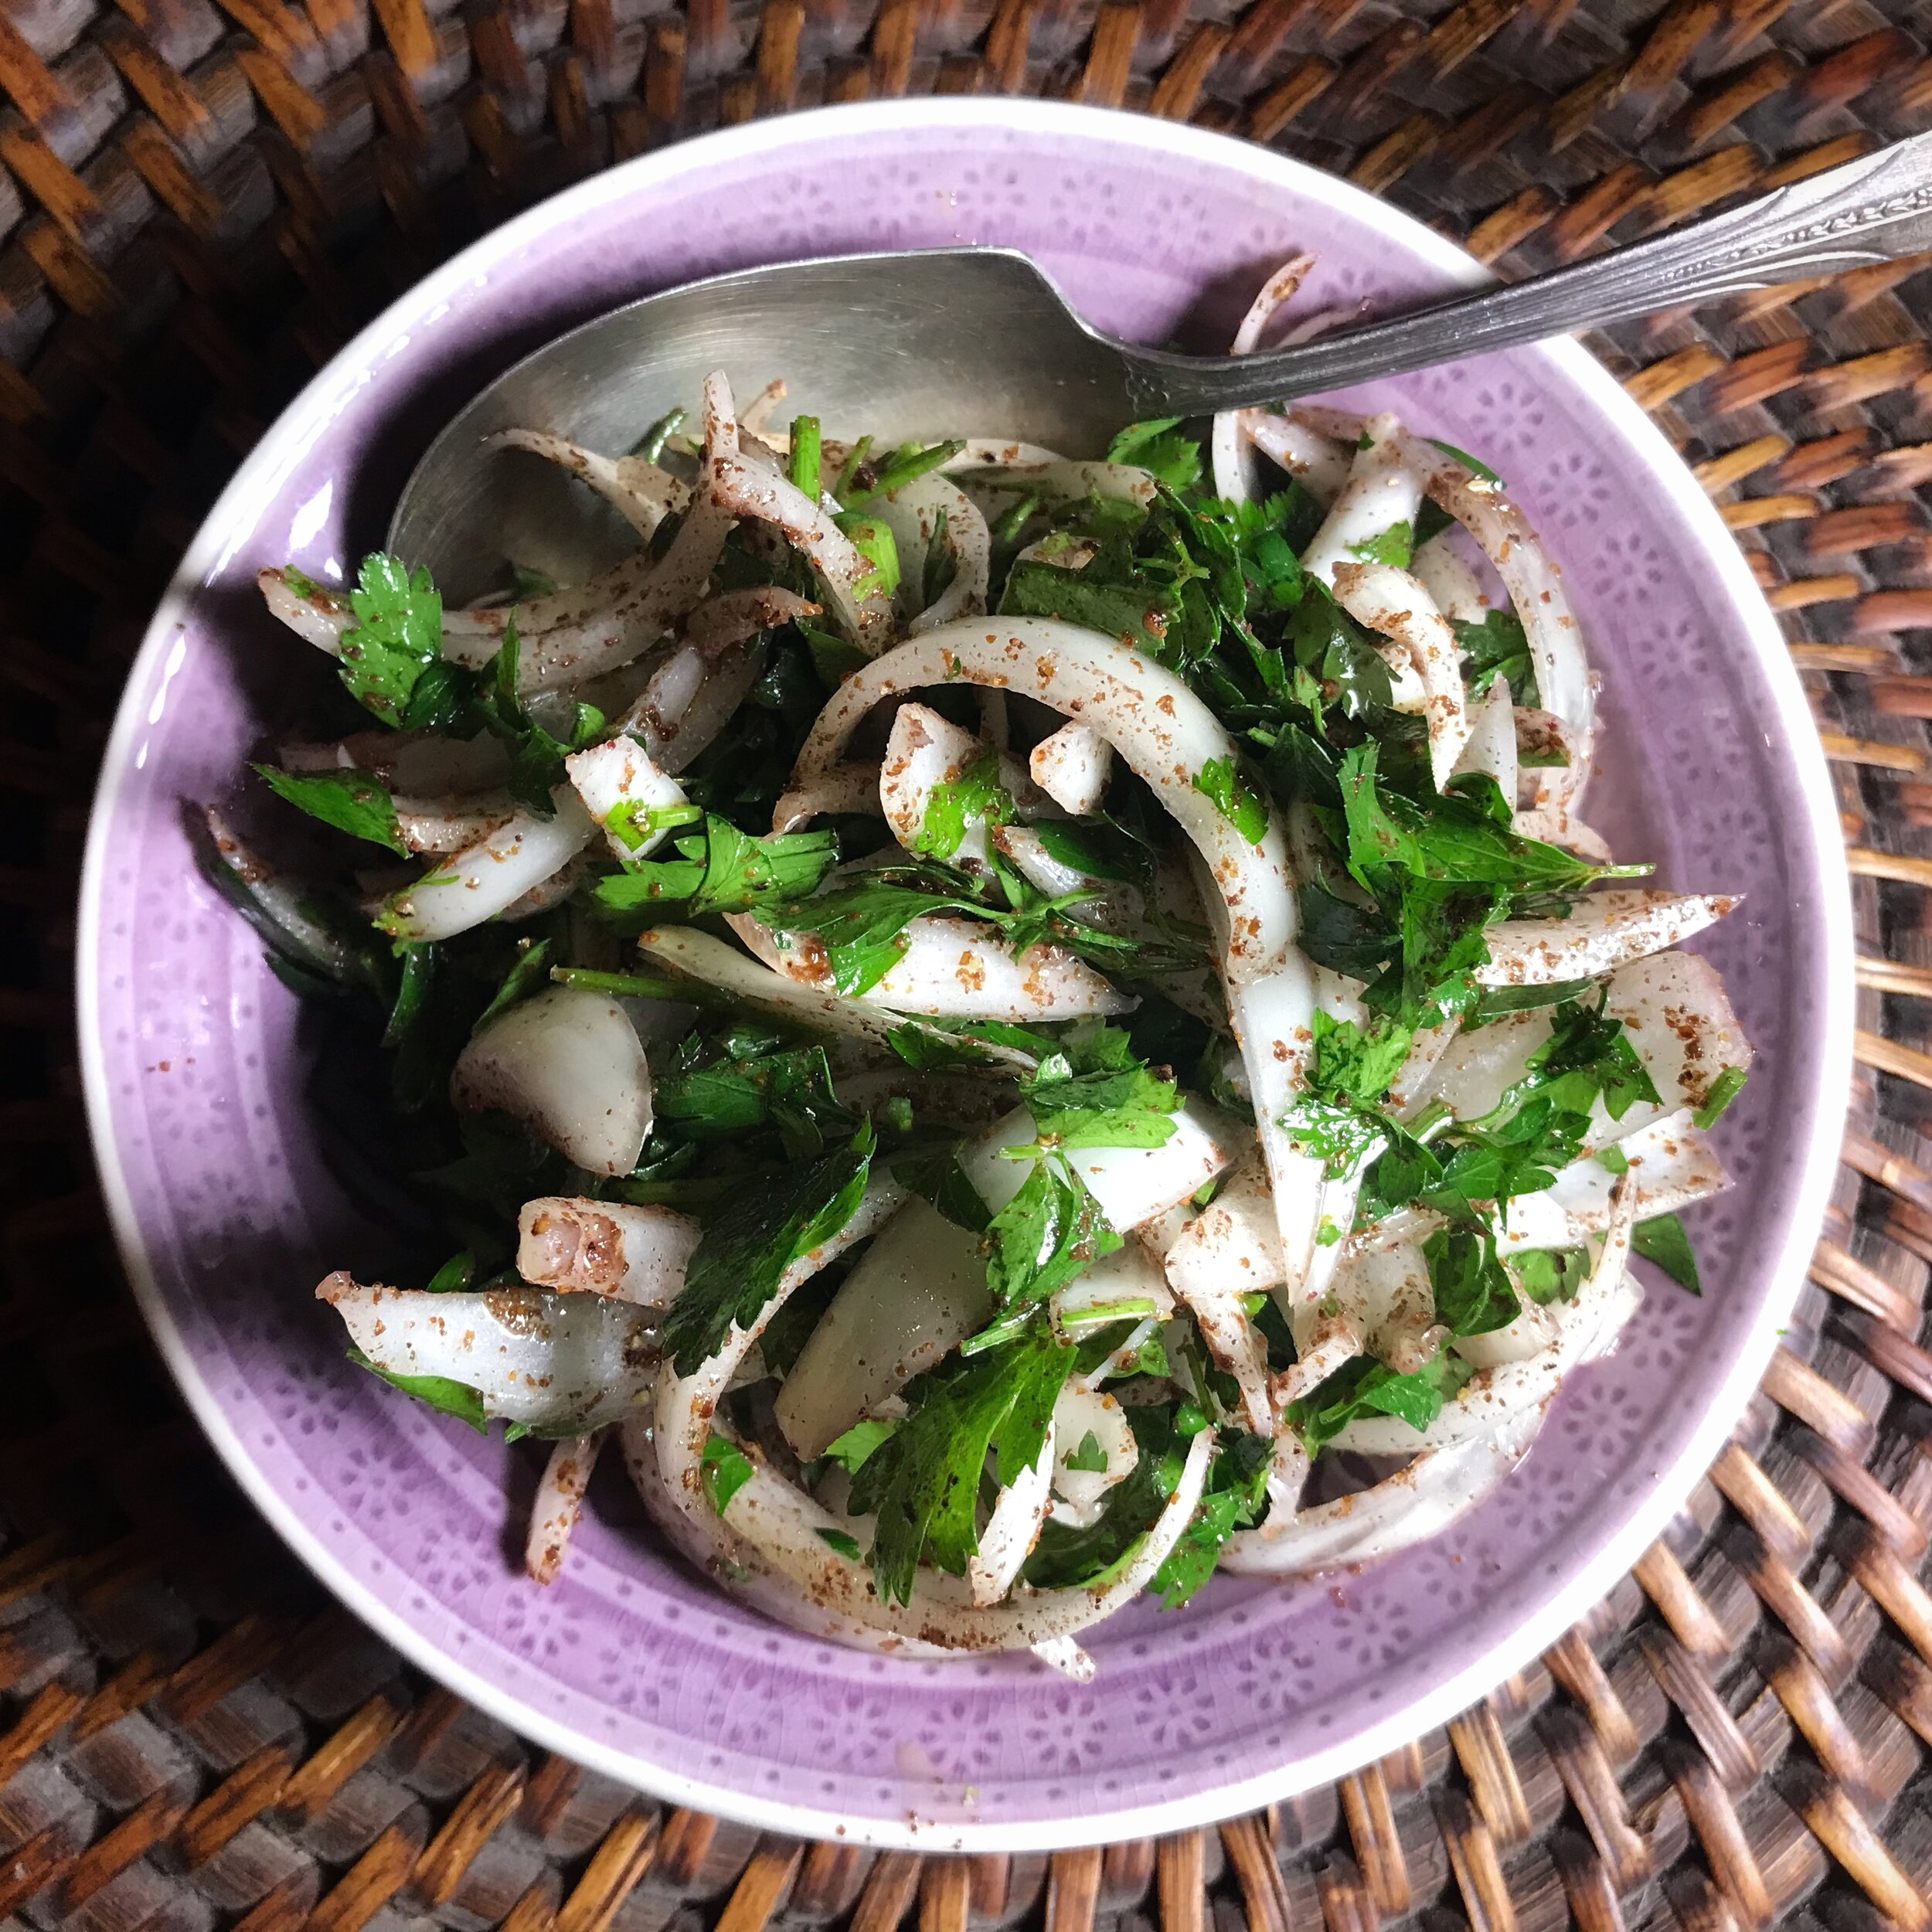 Anissa Helou's Onion and Parsley Salad (Vegan)